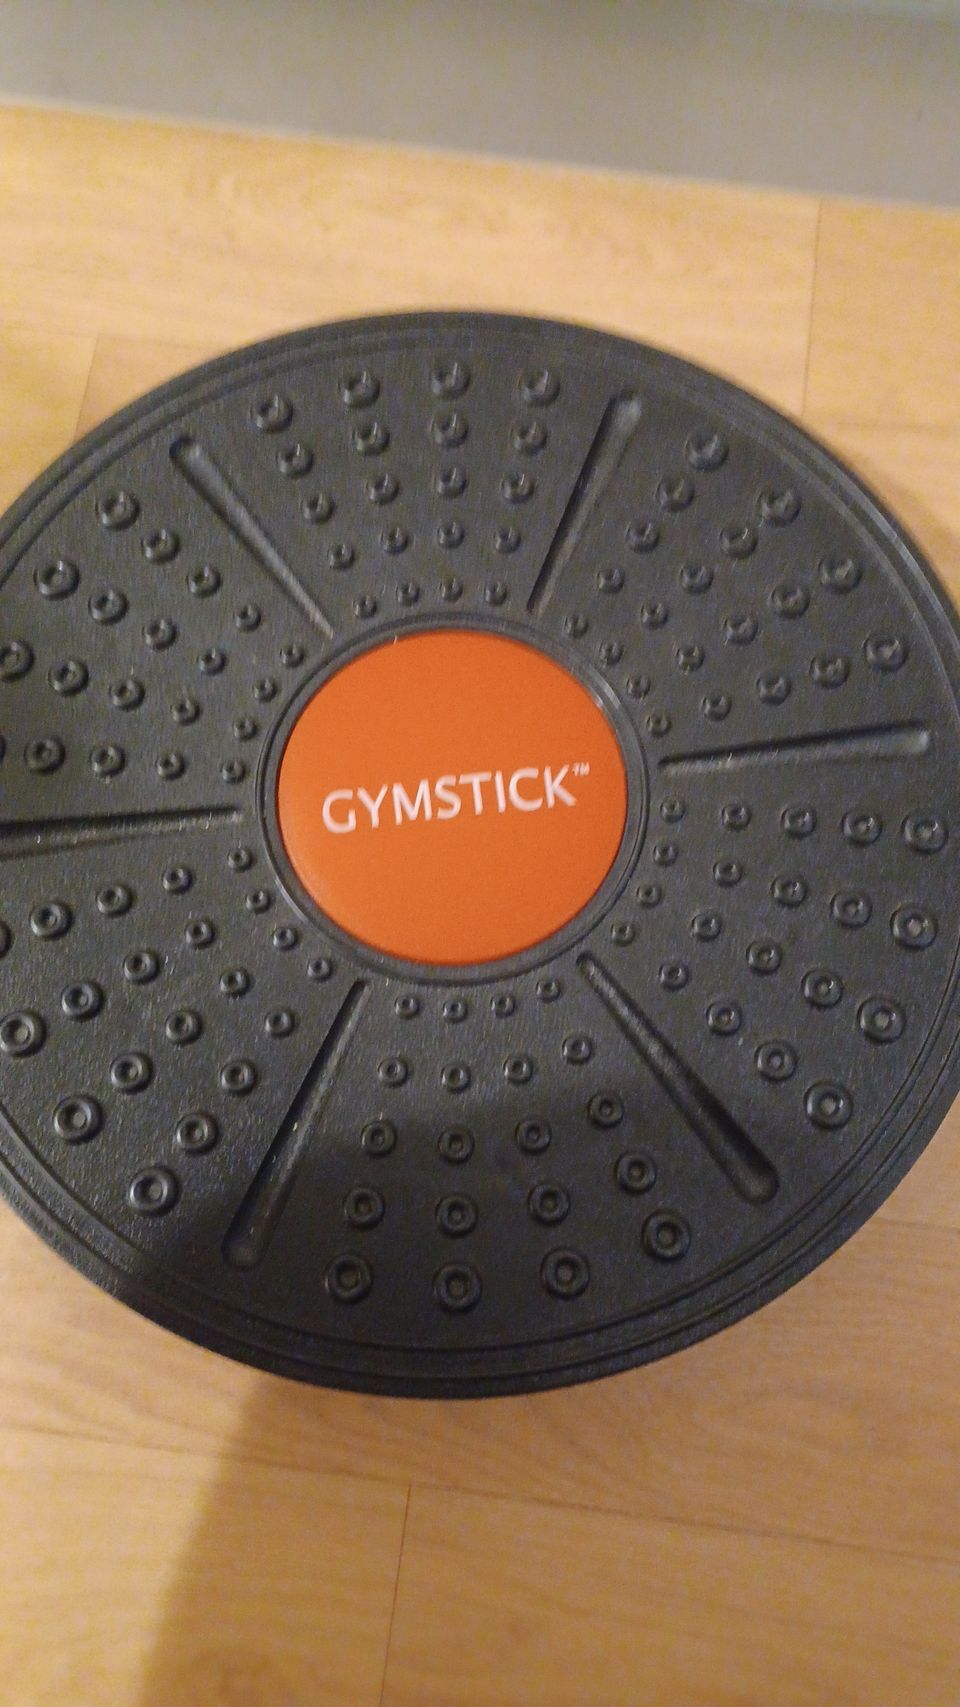 Gymstick 36x5cm Balanc Board - Balance Equipment - Fitness Equipment